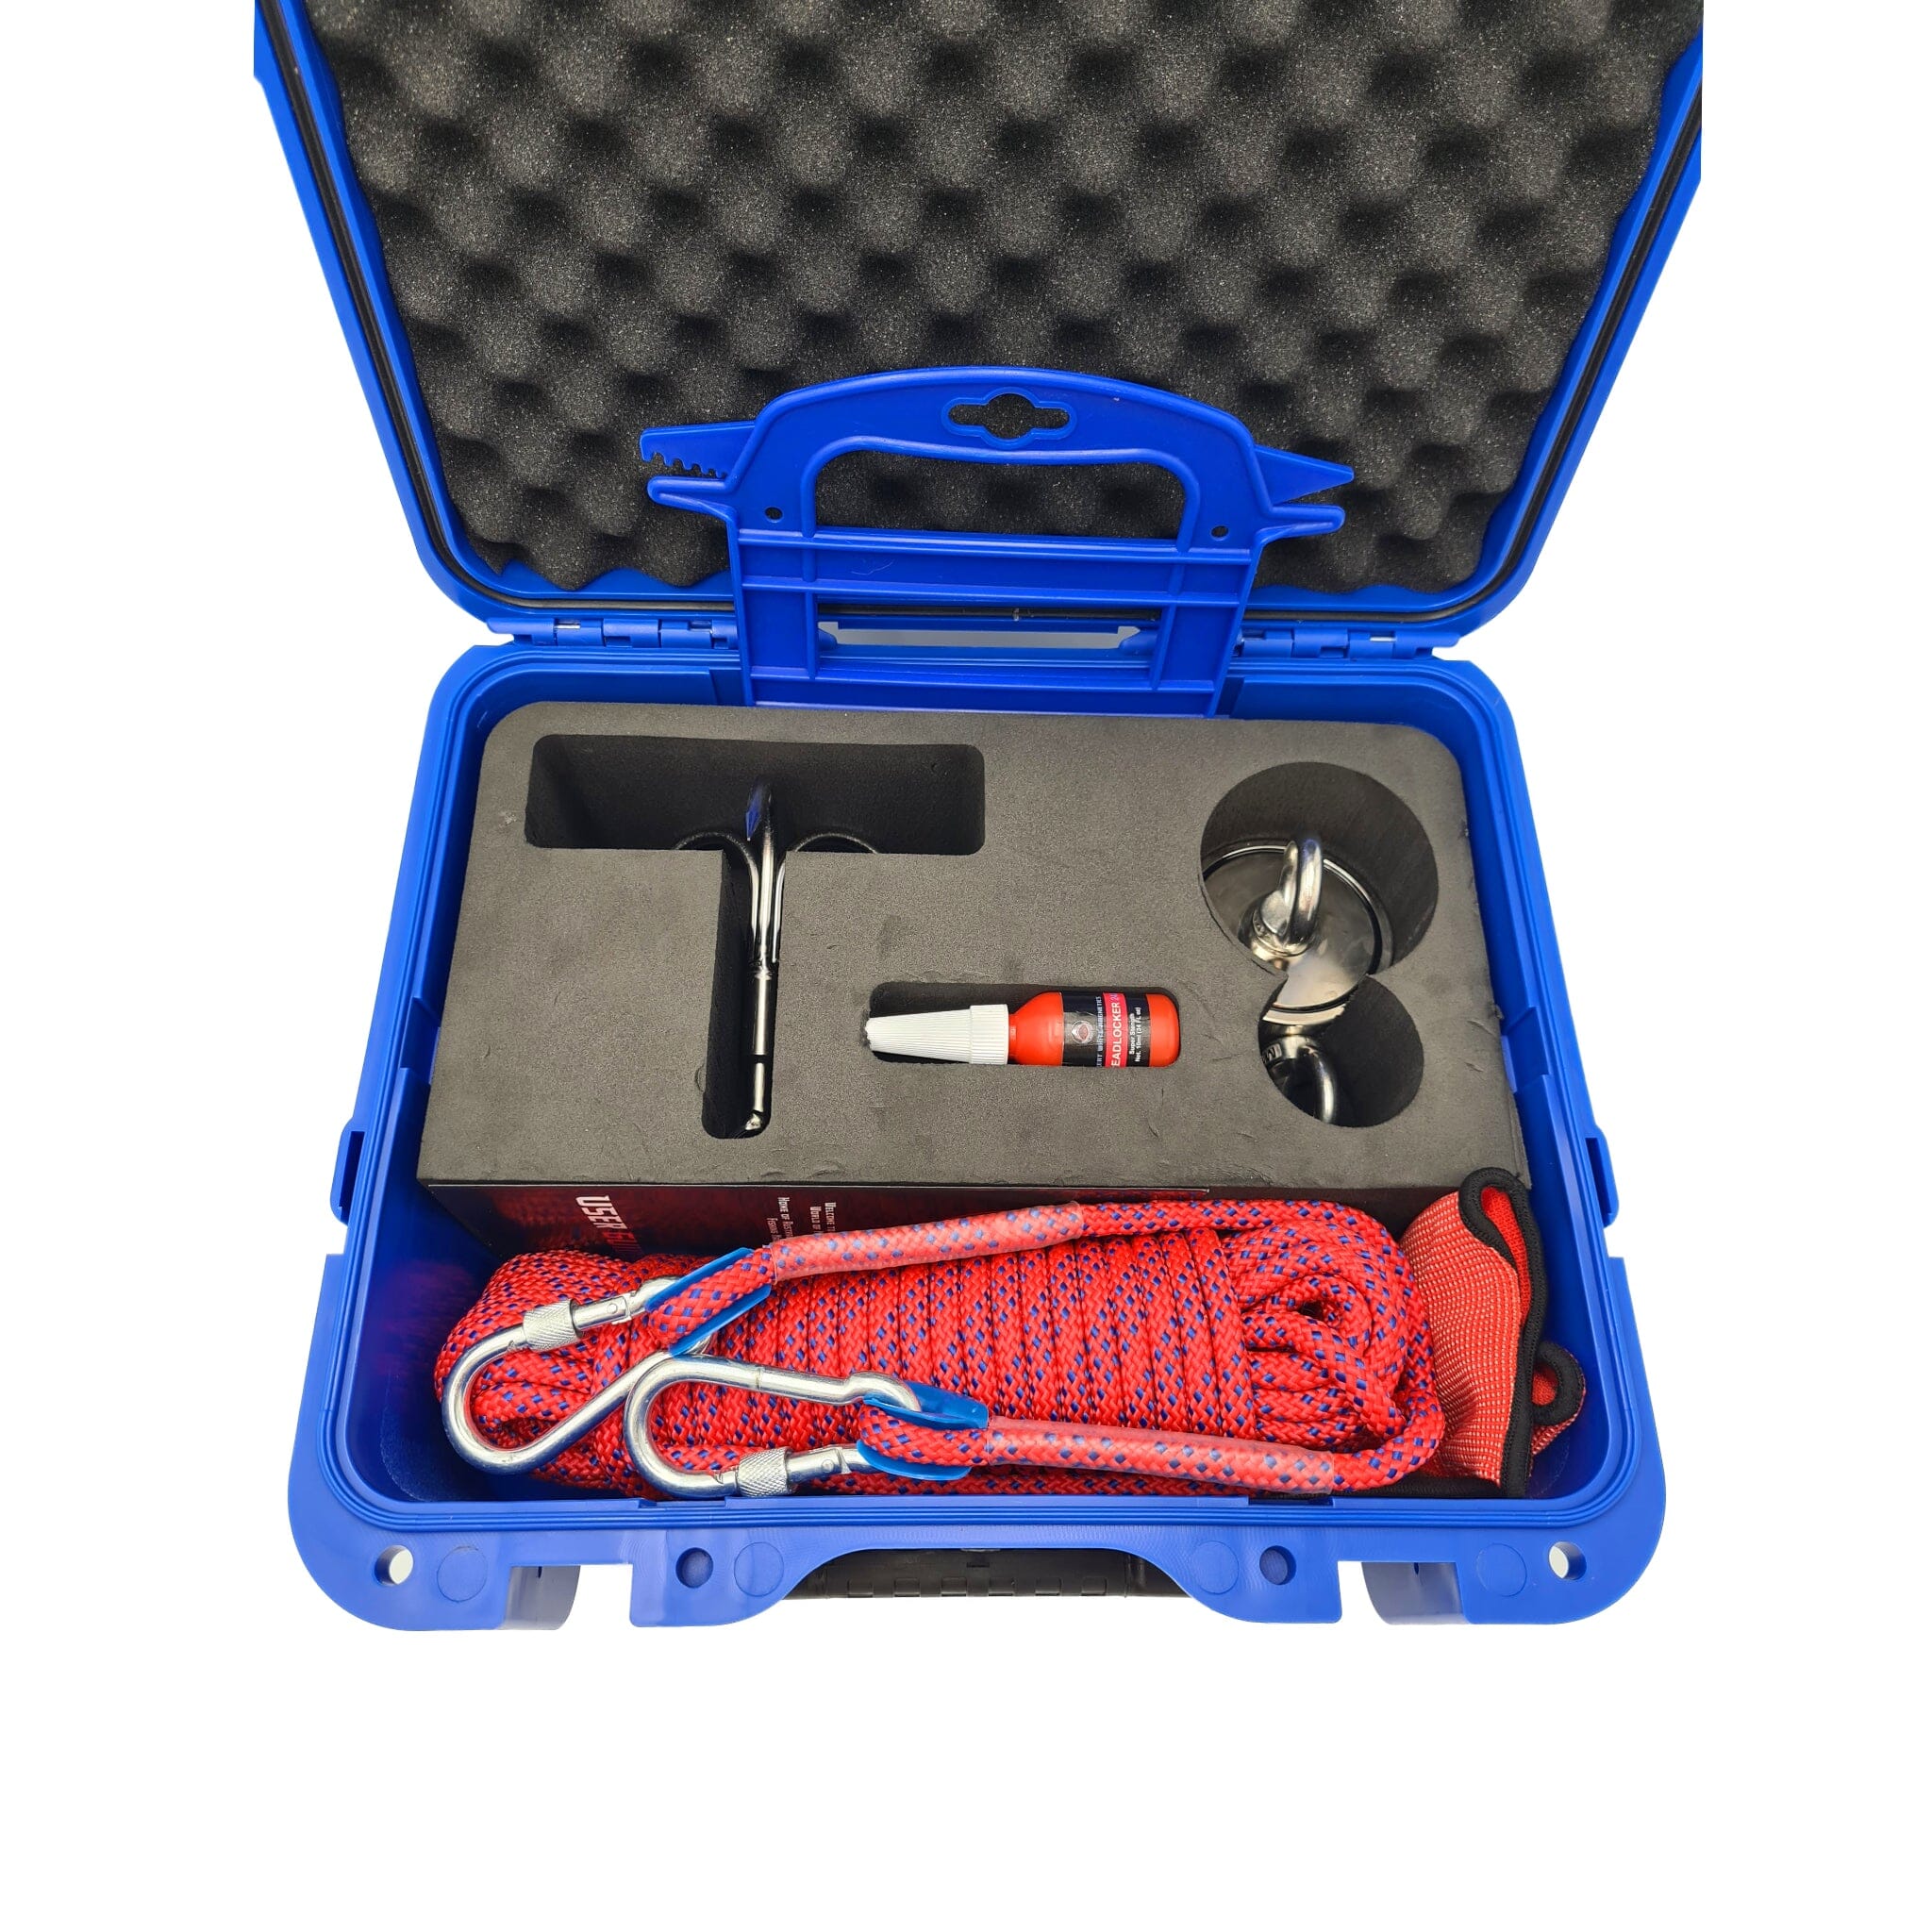 JAWS - 1,200 LB Deluxe Magnet Fishing Kit